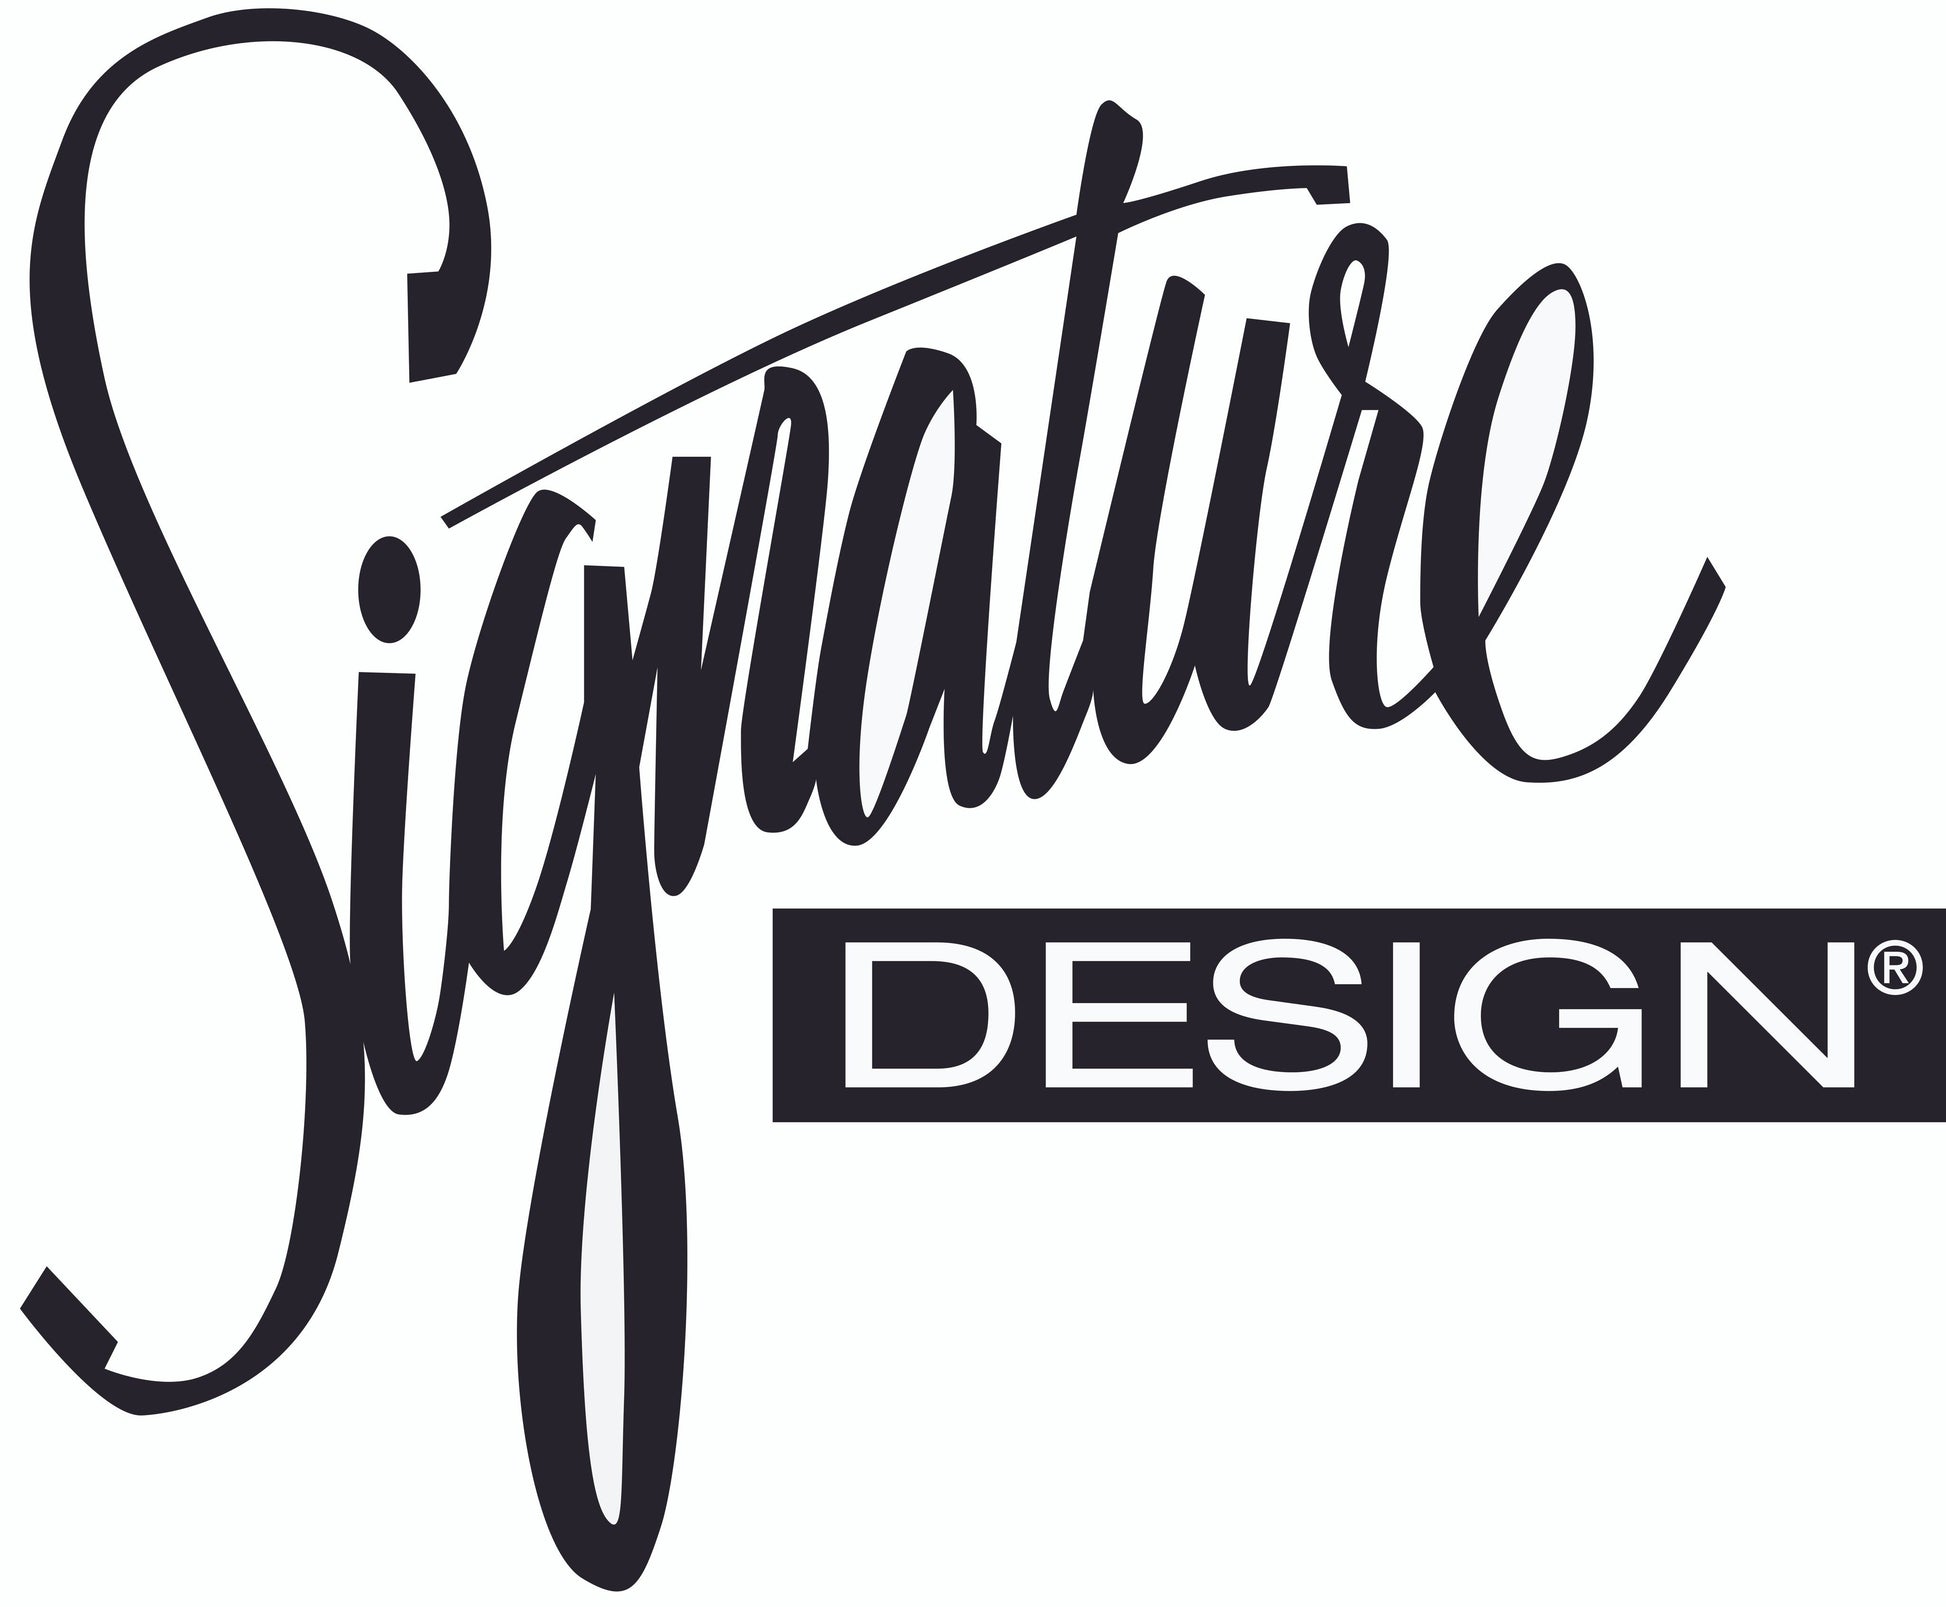 Veergate Metal Arc Lamp (1/CN) Signature Design by Ashley®